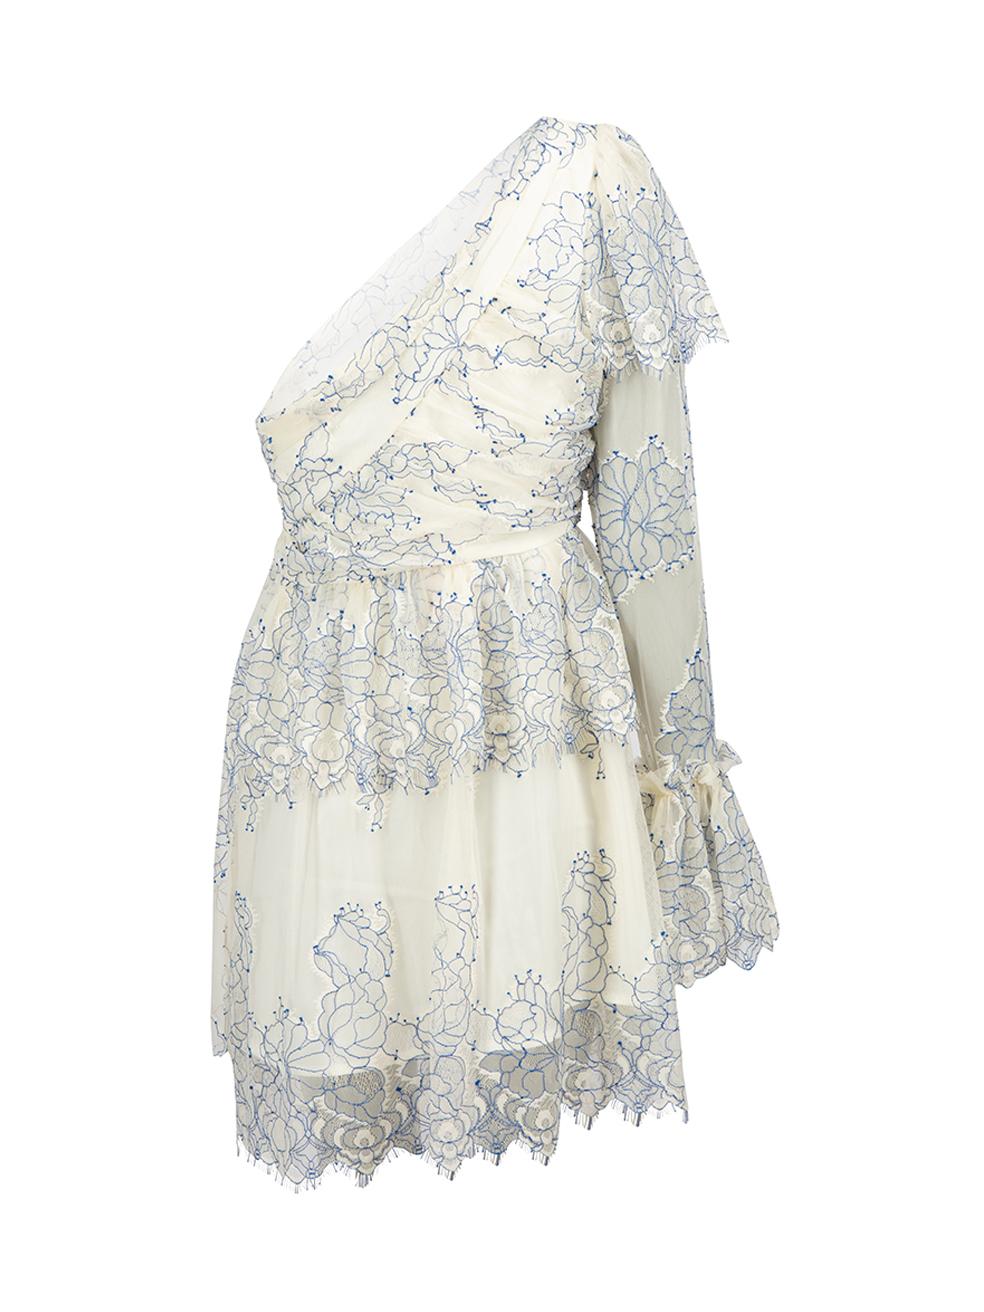 White Cream & Blue Floral Mesh Lovely Mini Dress Size L For Sale